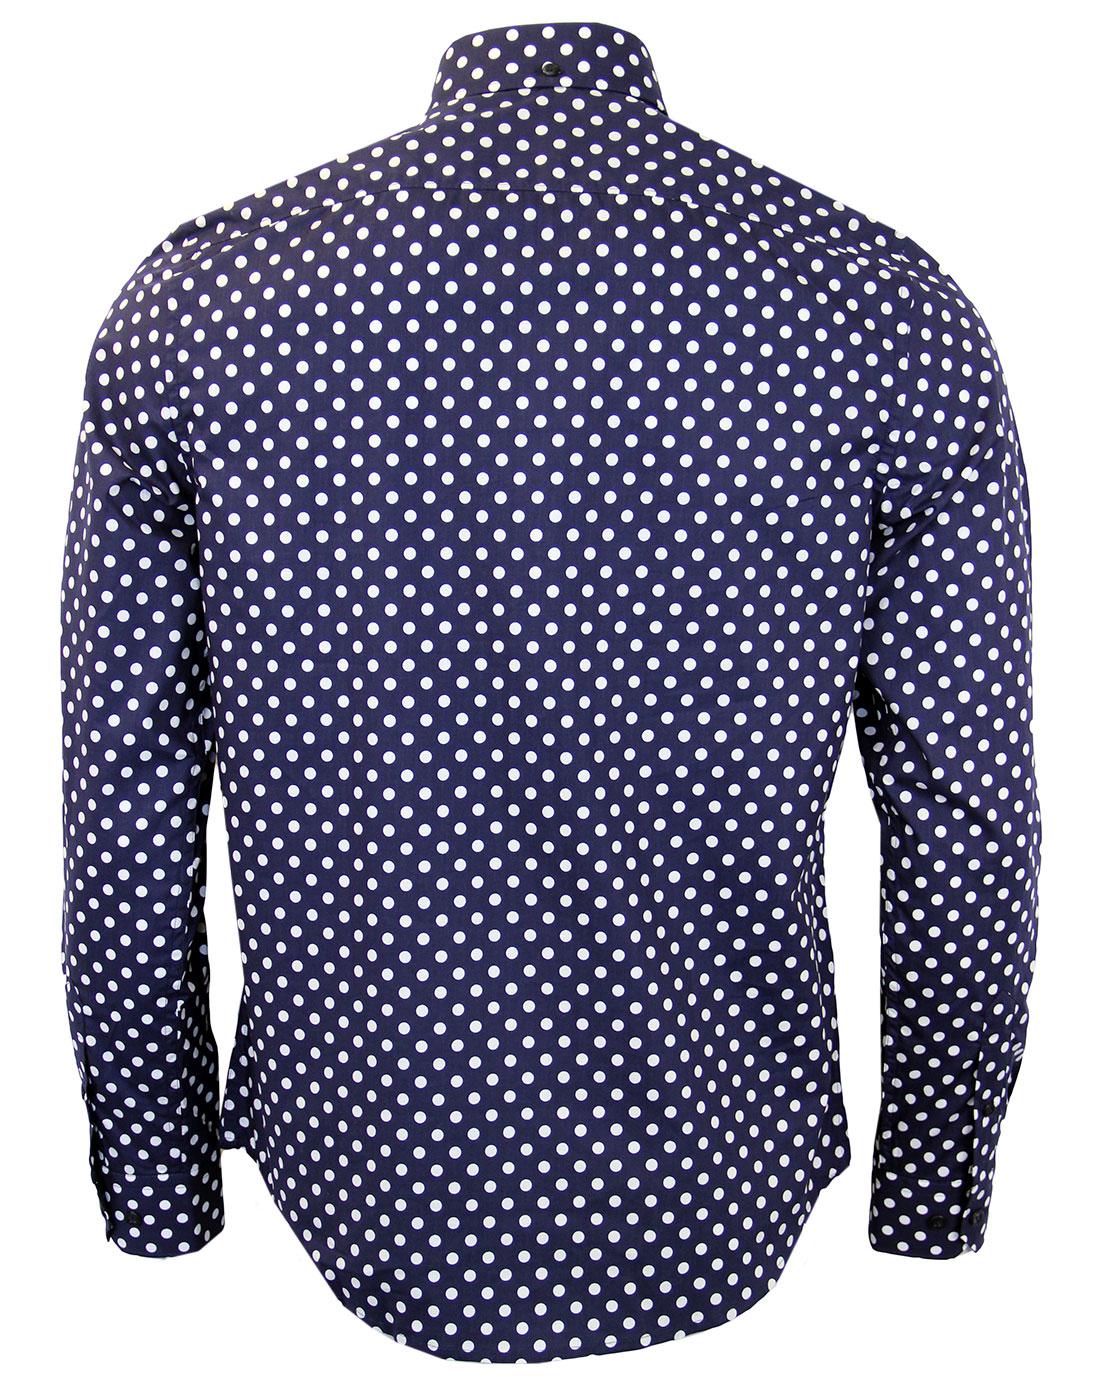 BEN SHERMAN 1960s Mod Large Polka Dot Retro Navy Shirt